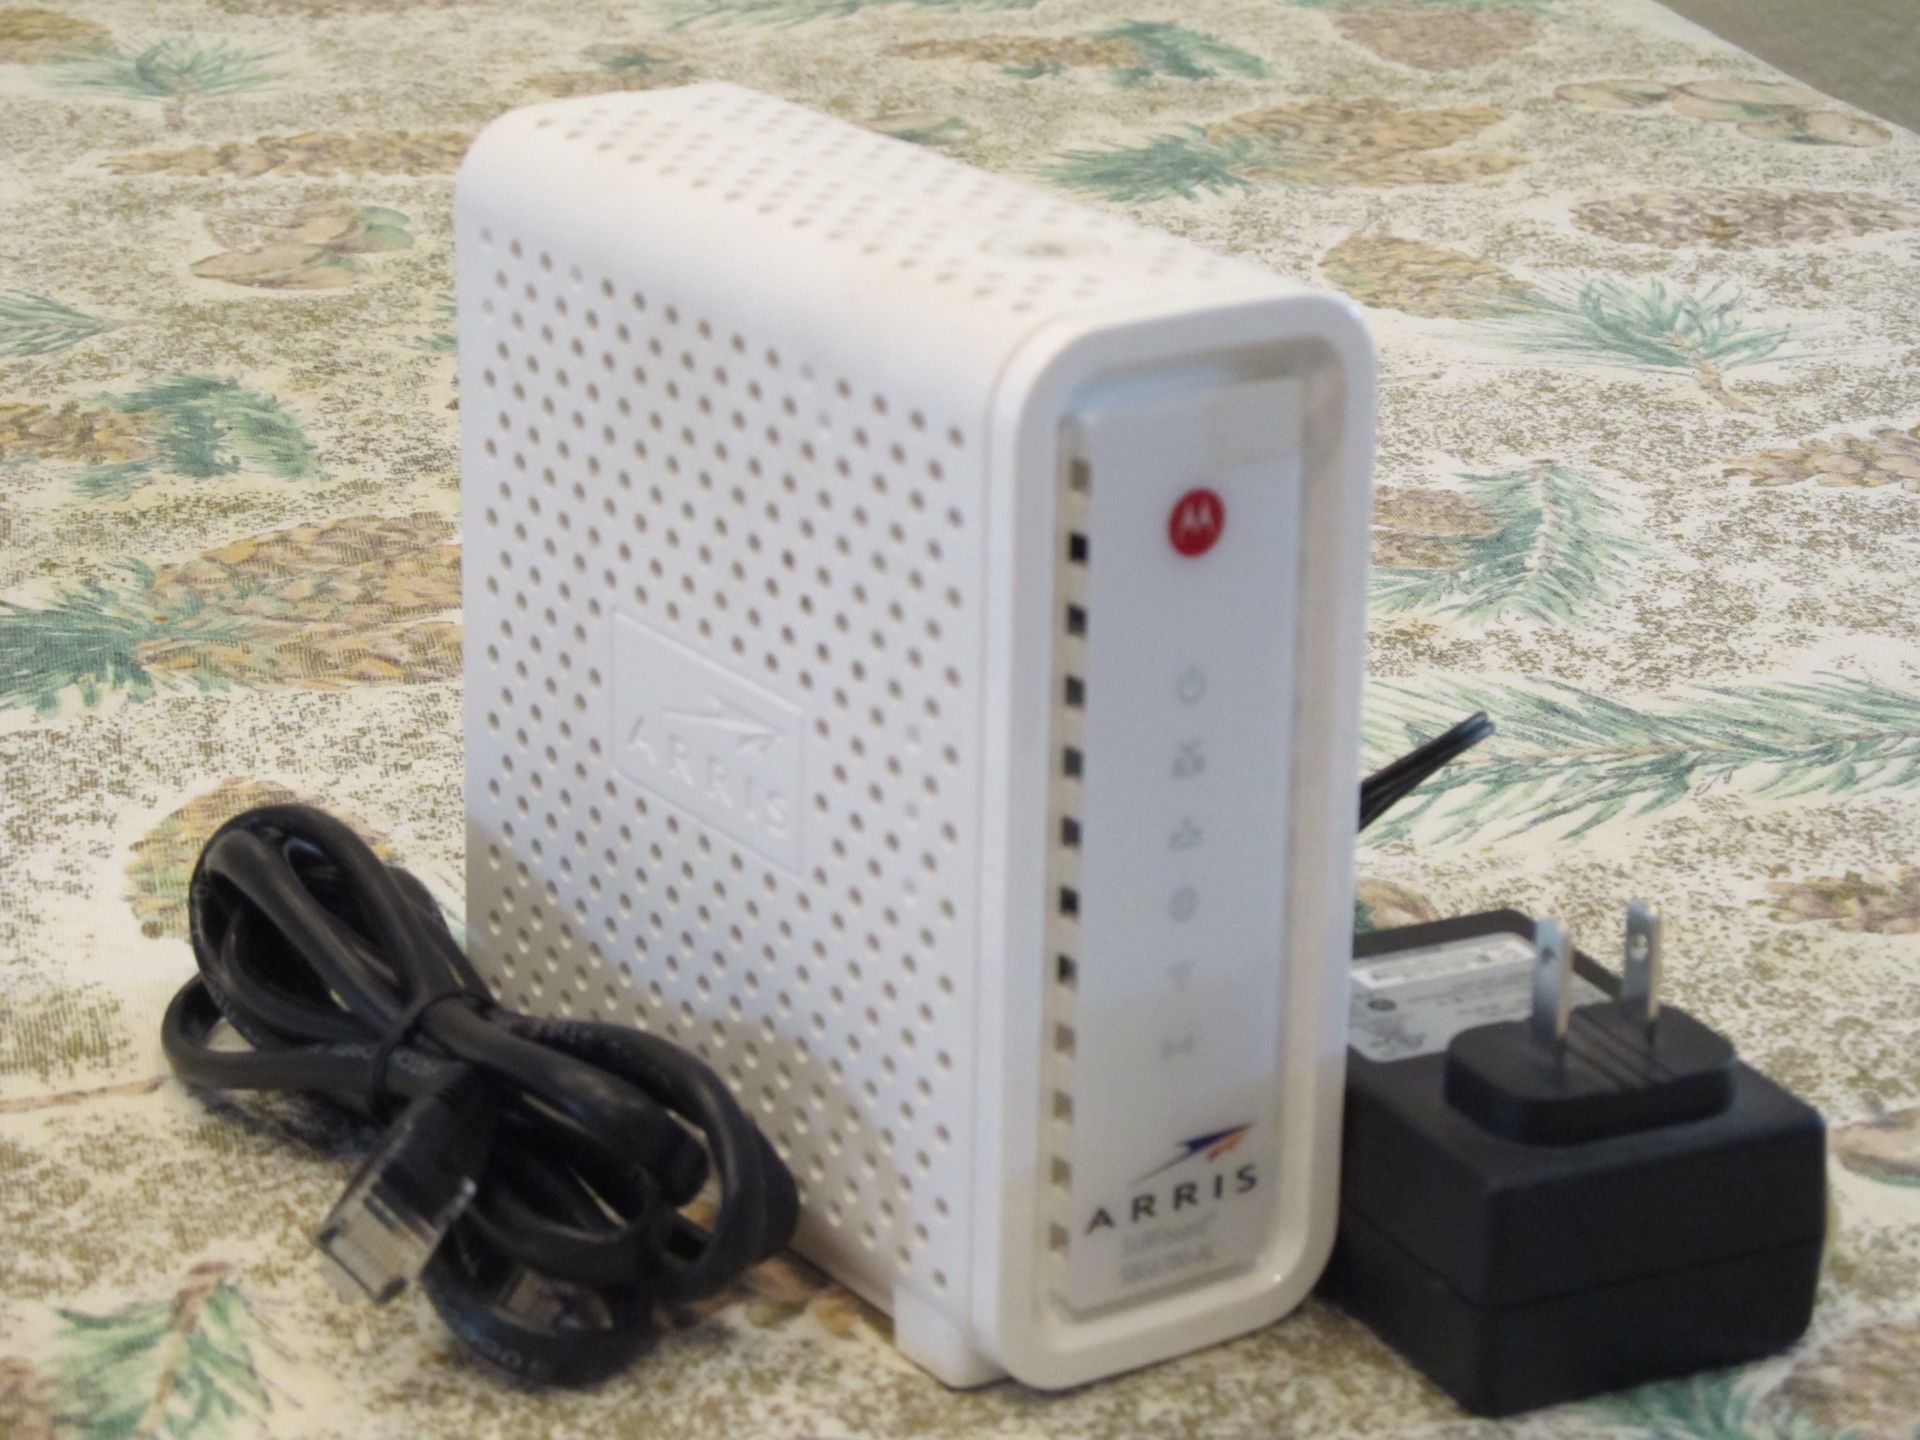 Arris SBG6700-AC Cox Cable Modem WiFi Router